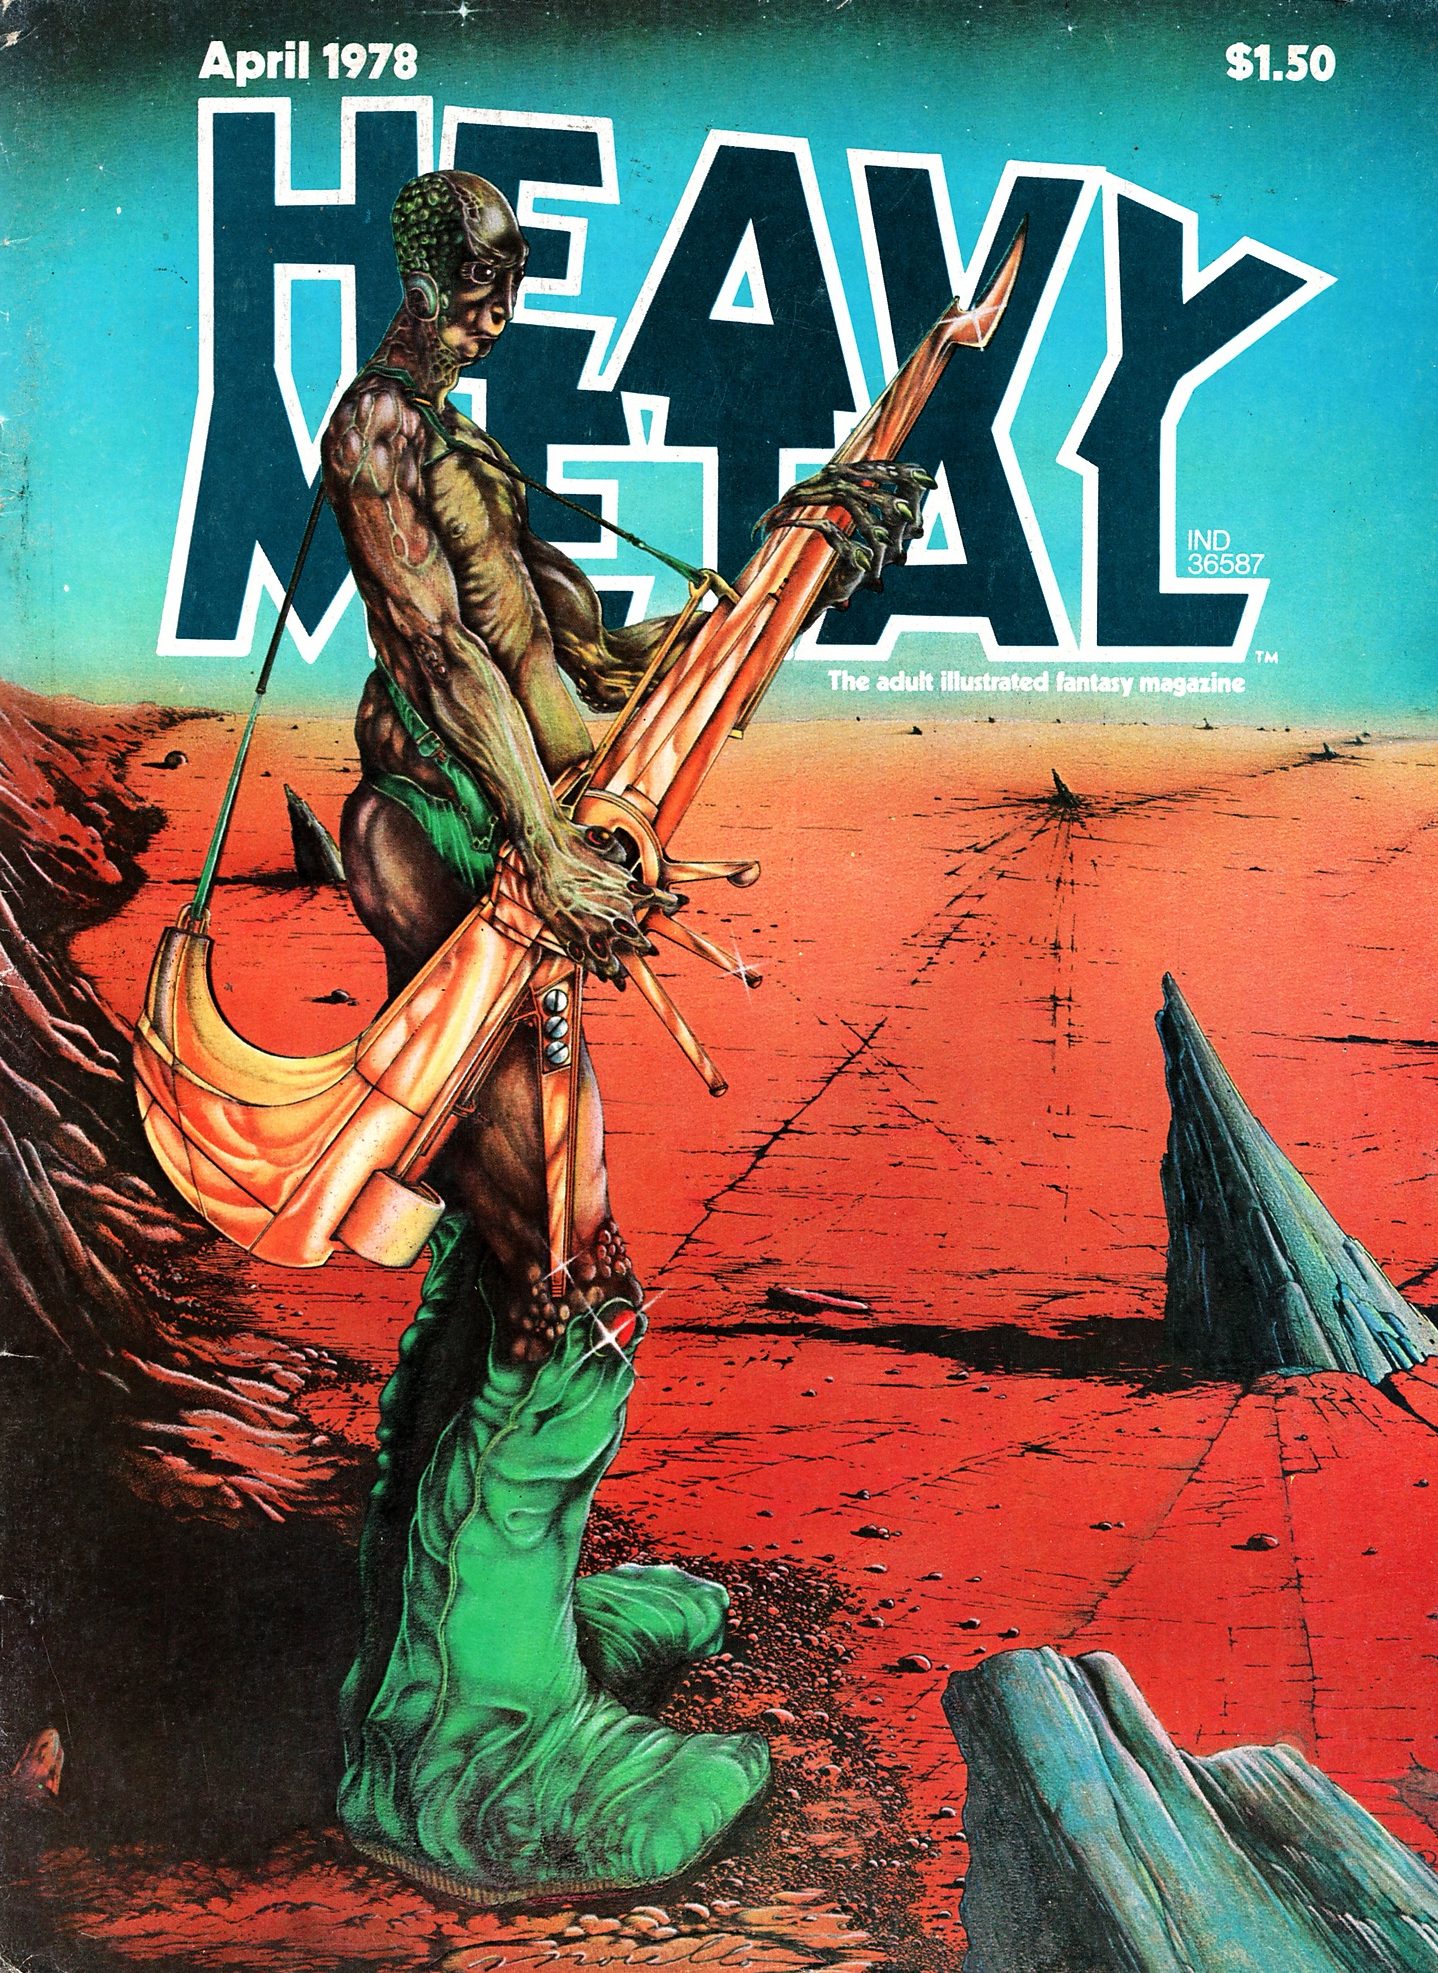 Heavy Metal. 1978. April – Volume 1 No. 13